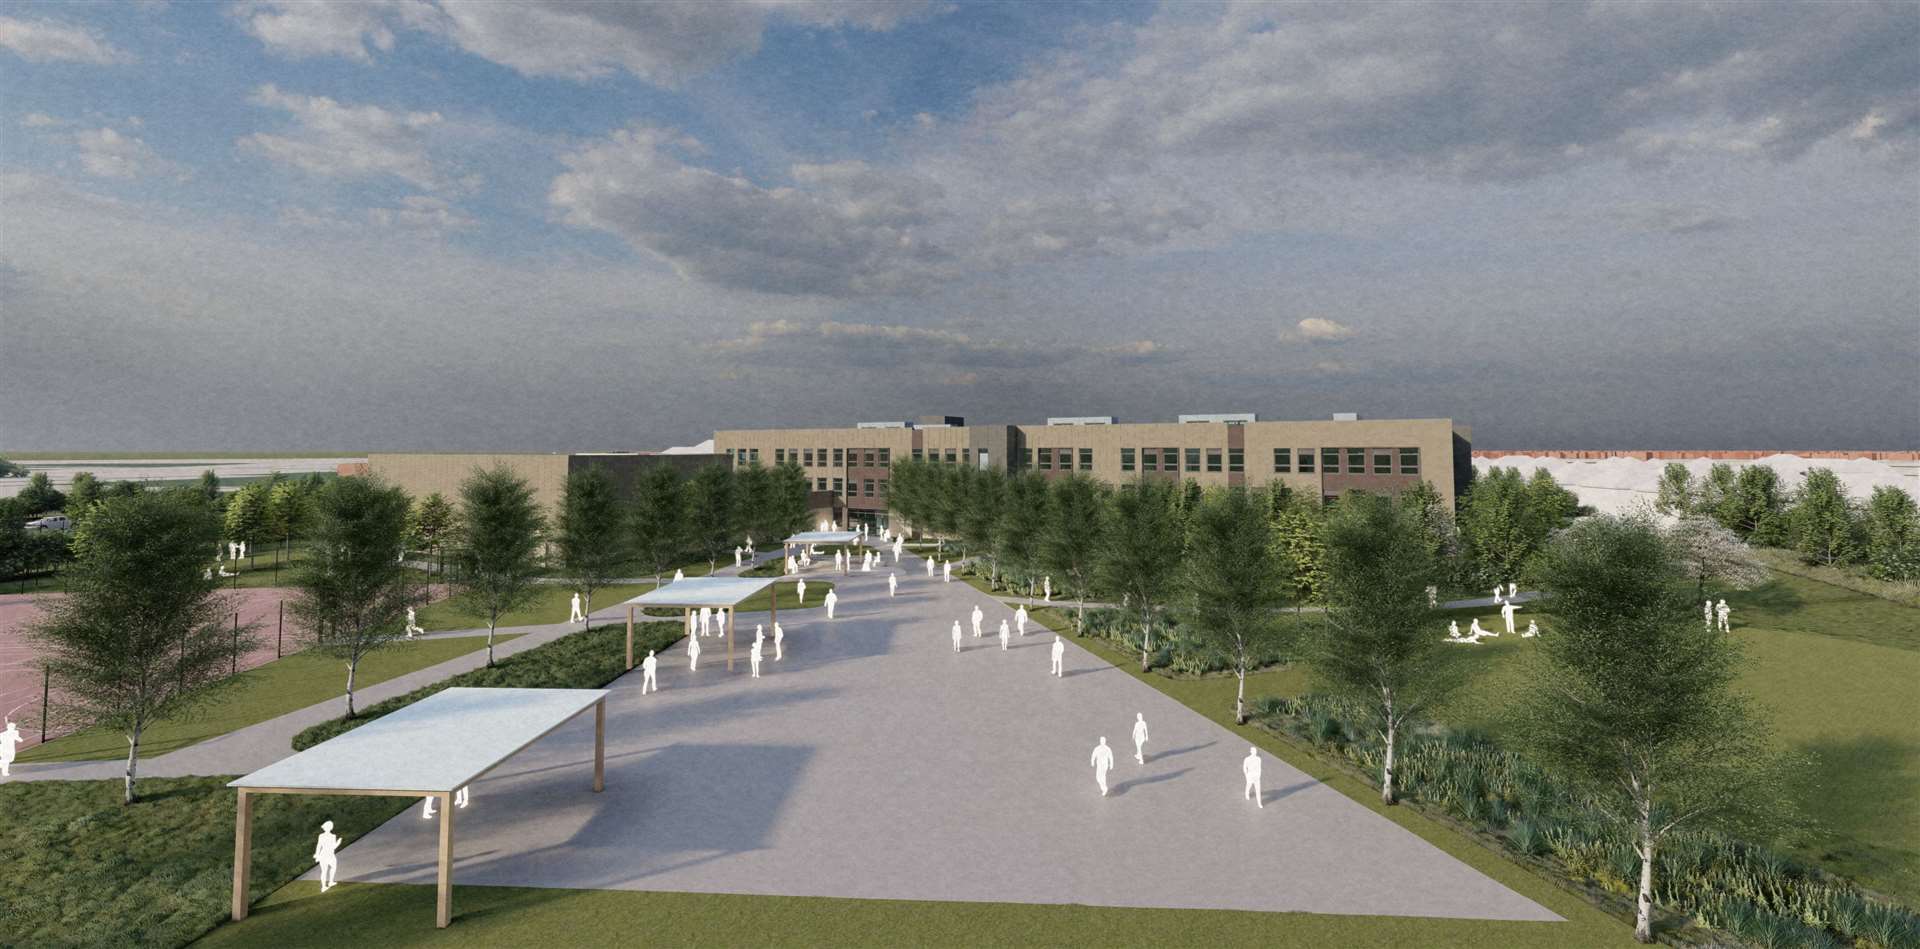 Bowmer + Kirkland will build the Chilmington Green Secondary School